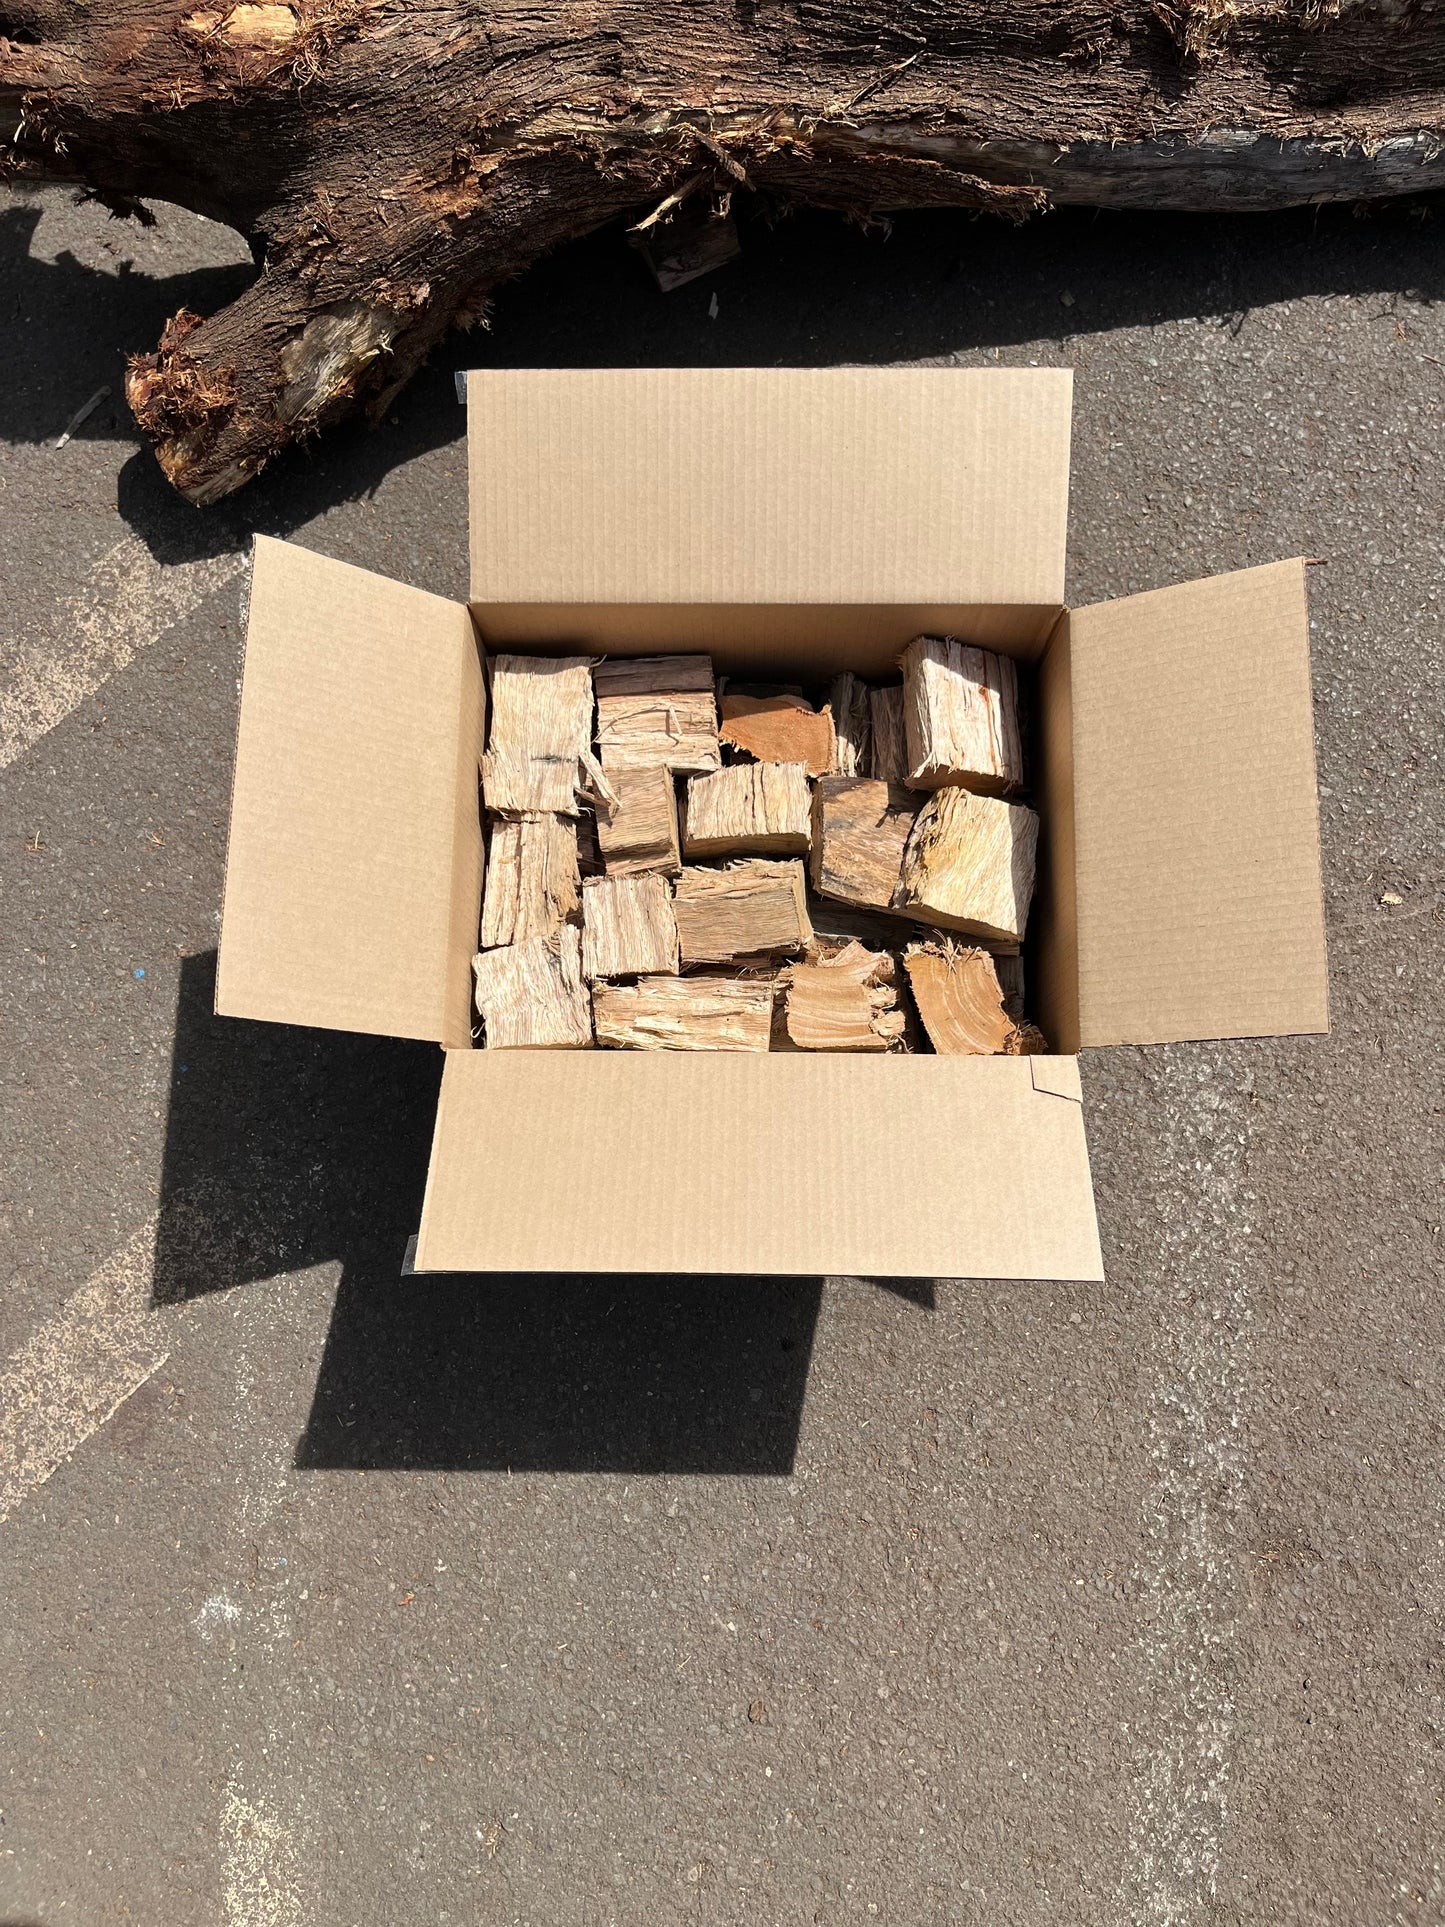 Mango Firewood Chunks - Large Box